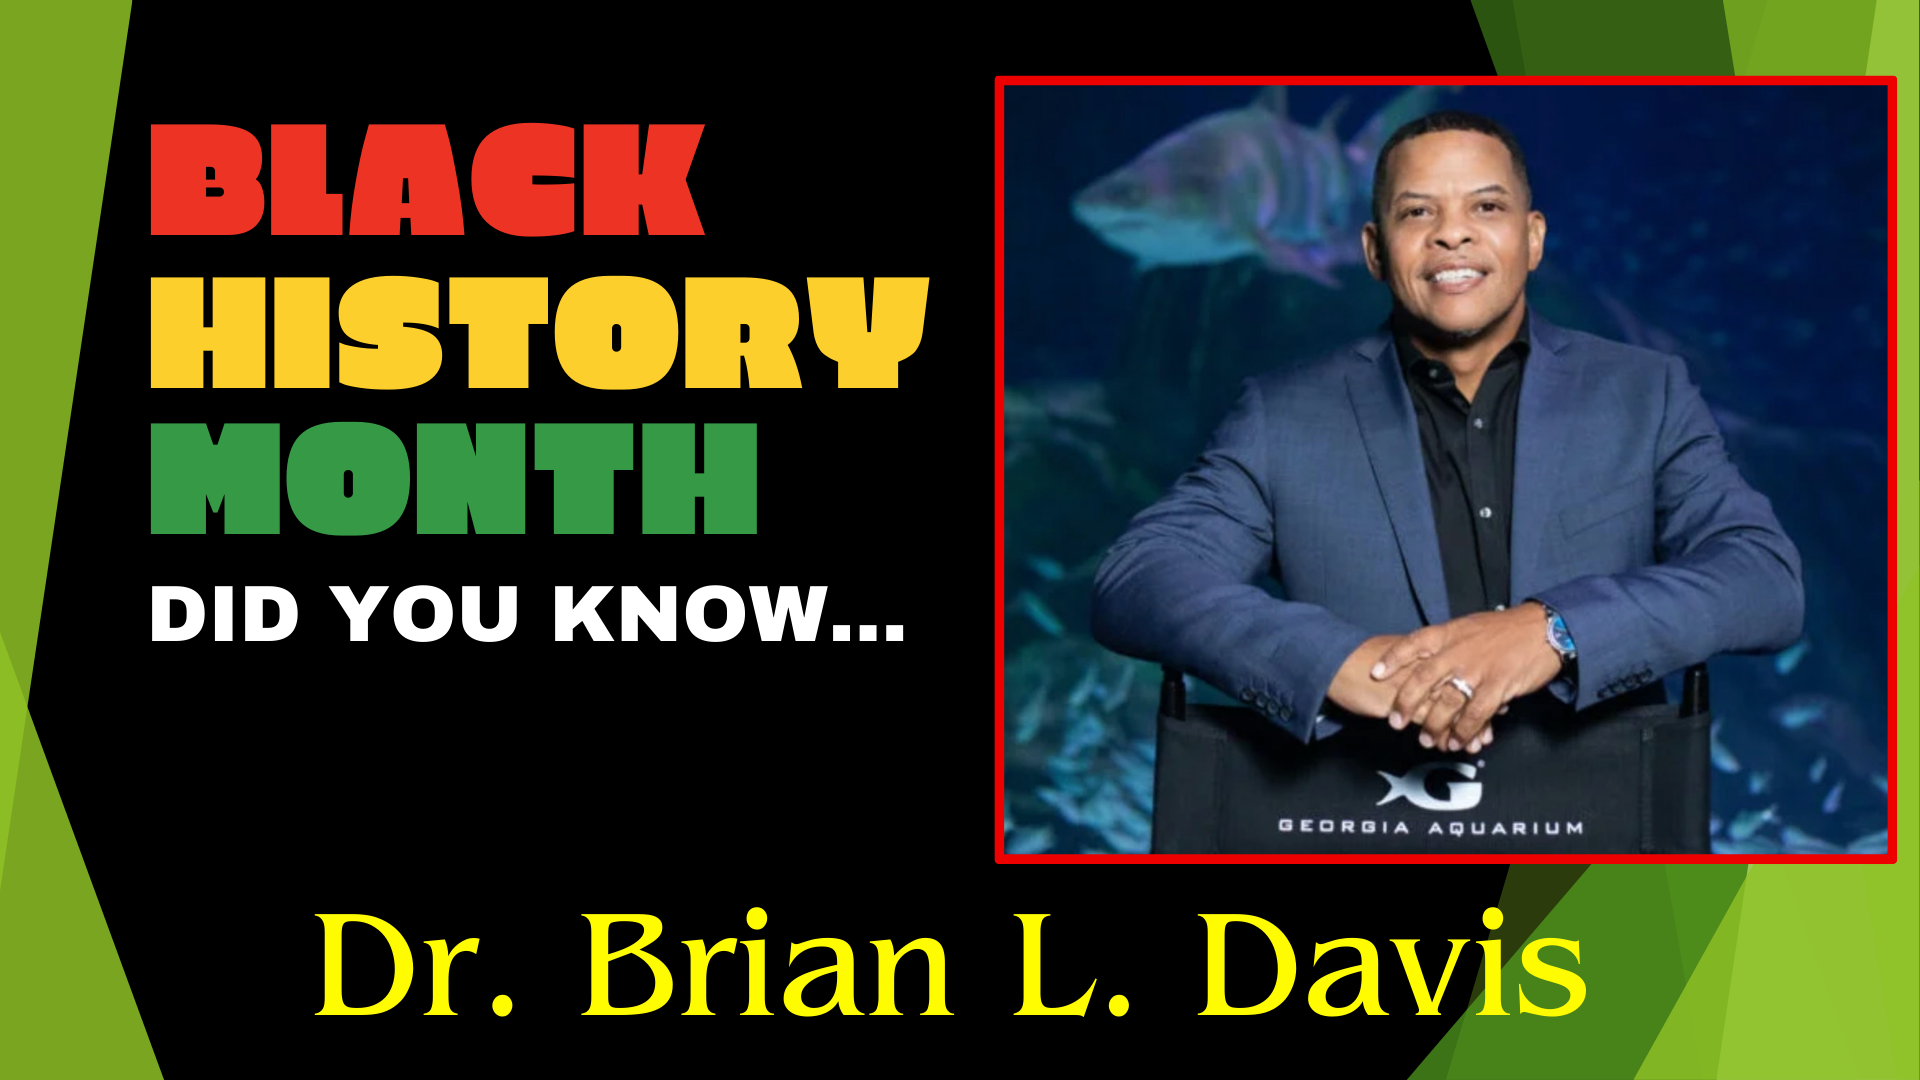 Black History Month at From the Heart Atlanta